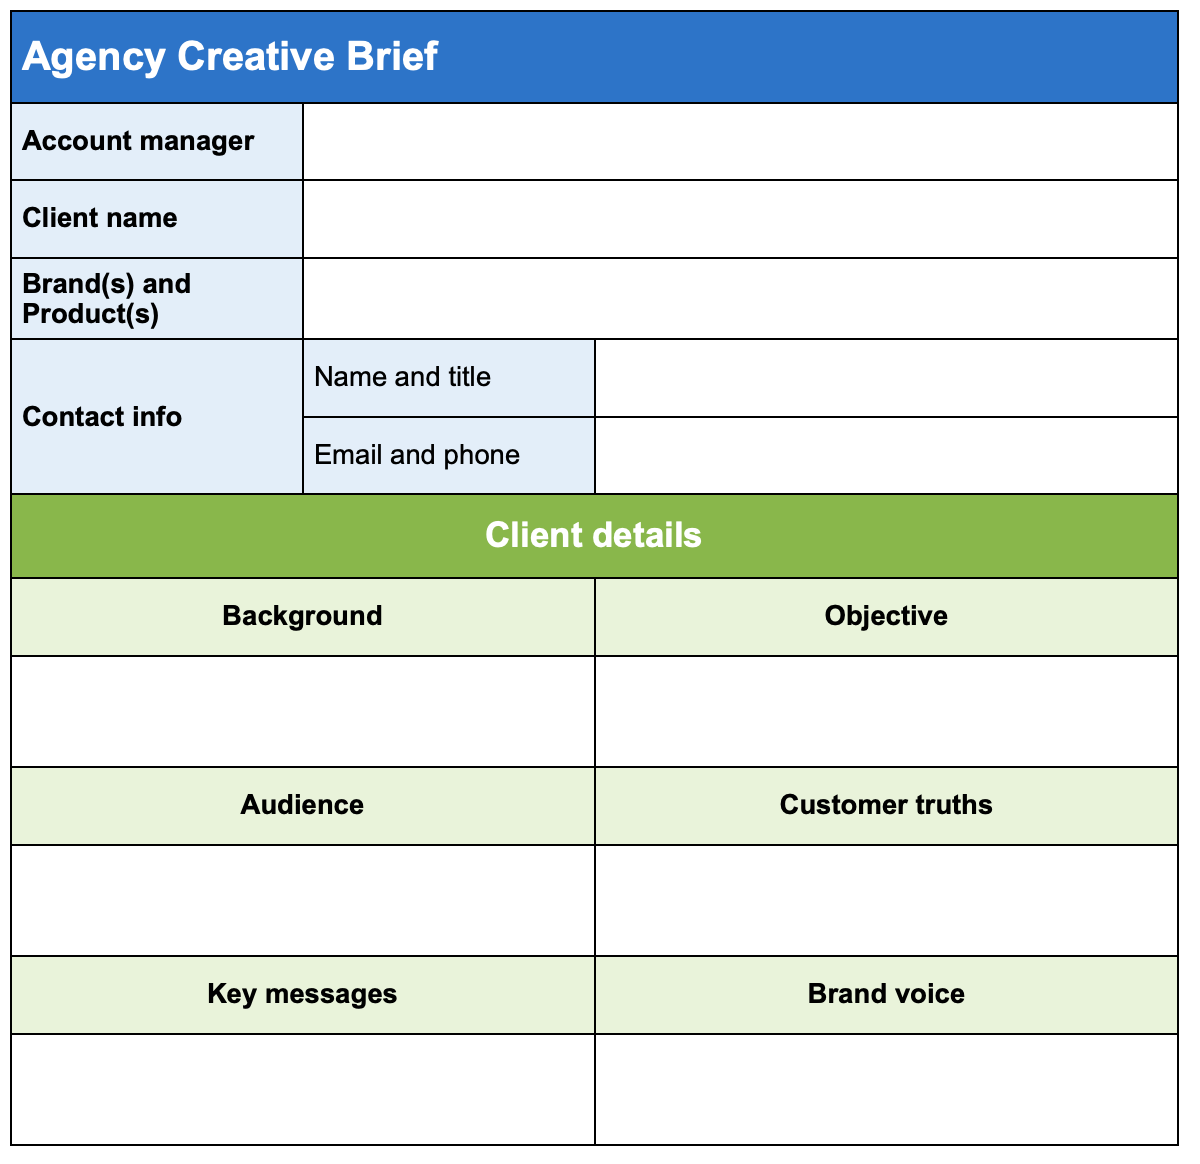 Agency creative brief template